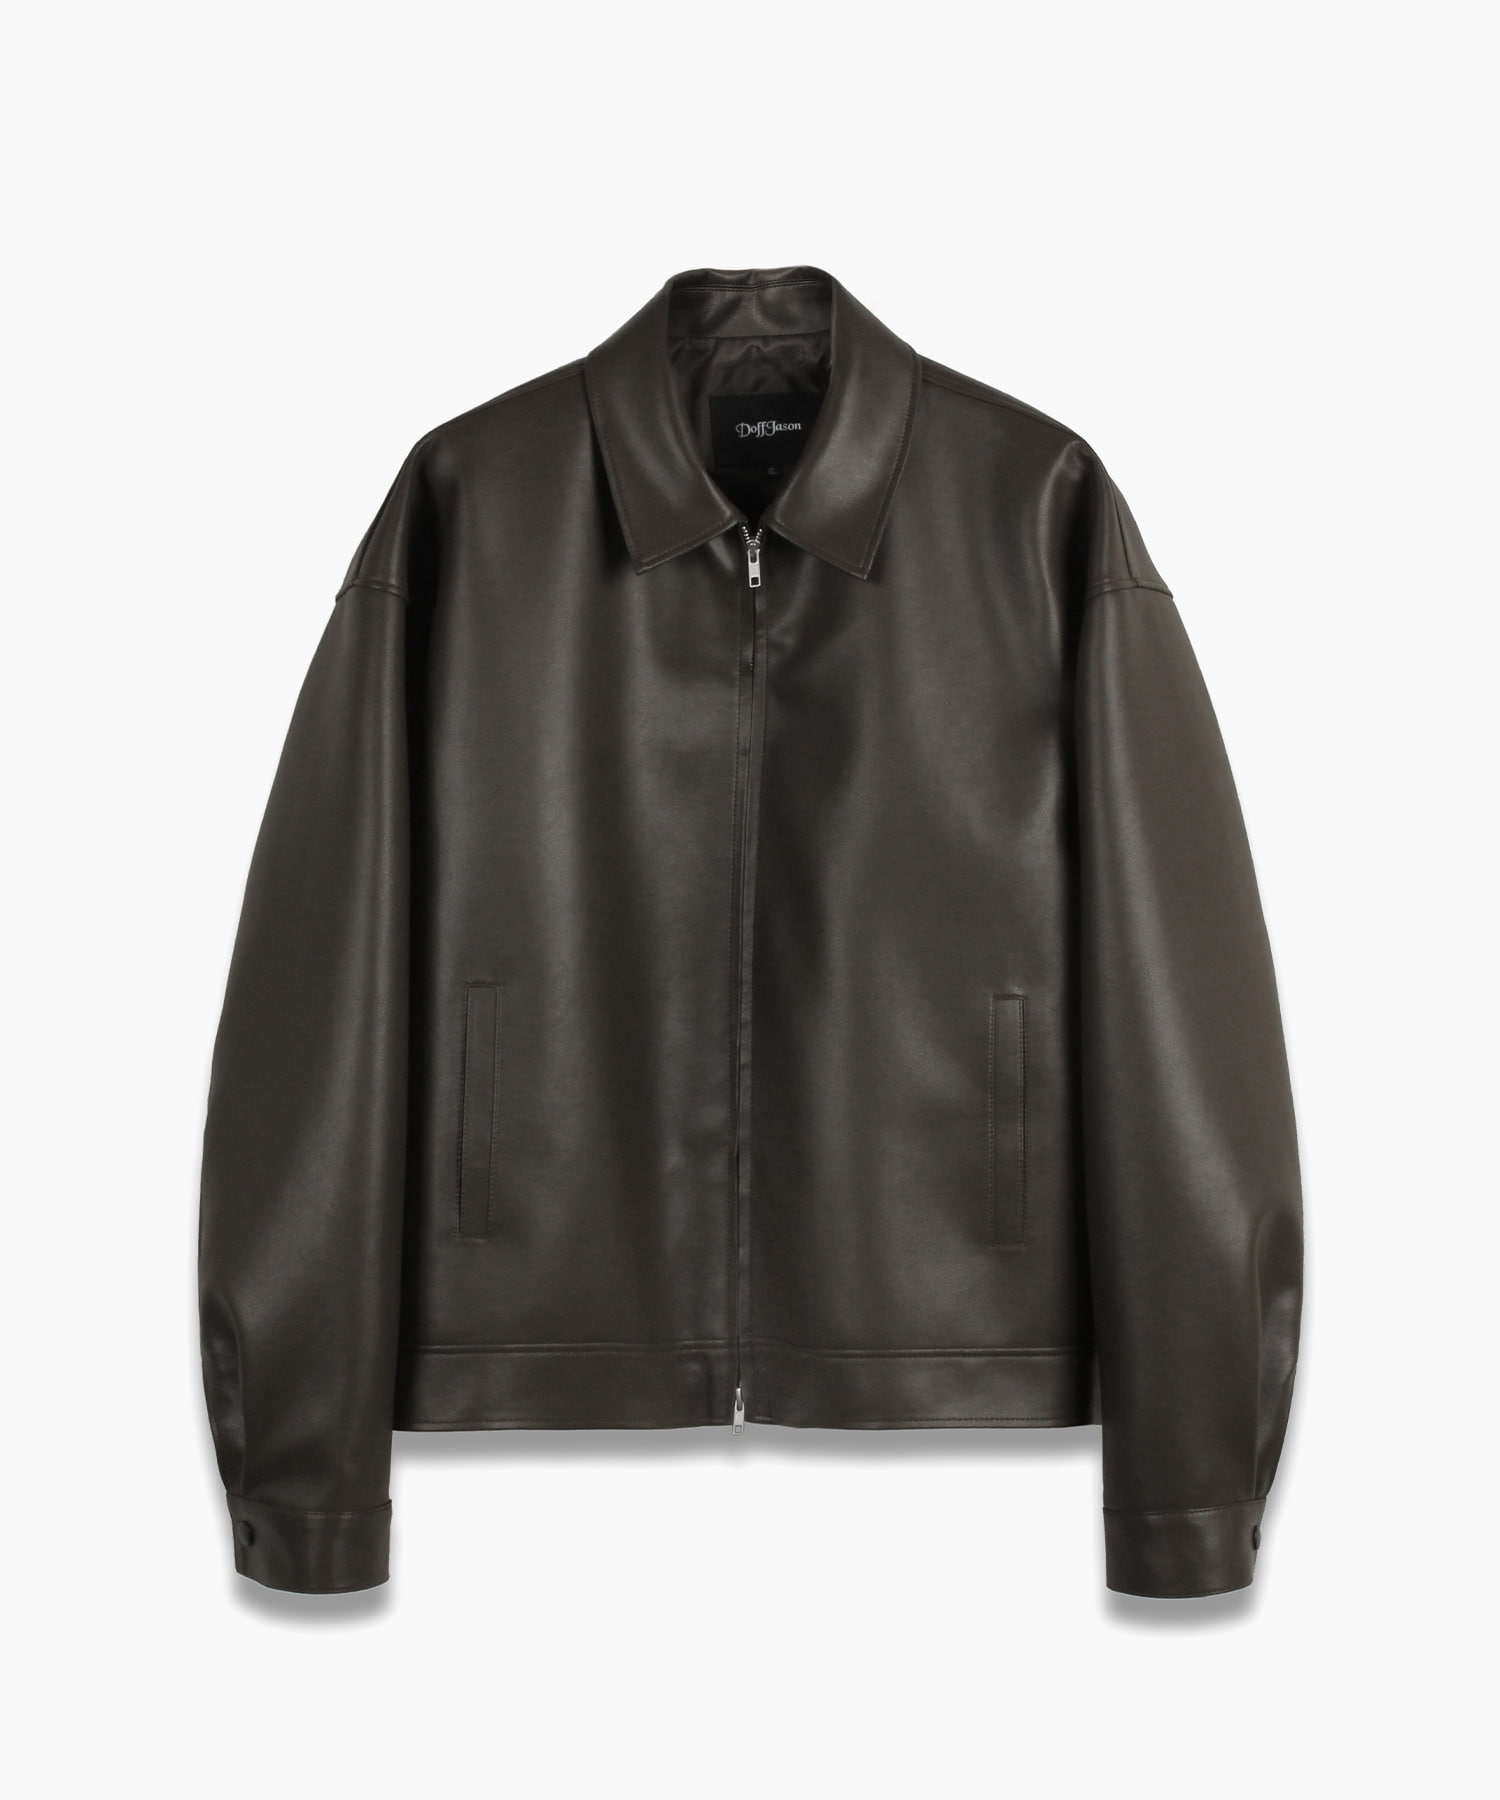 Overfit vegan leather single jacket (low brown)